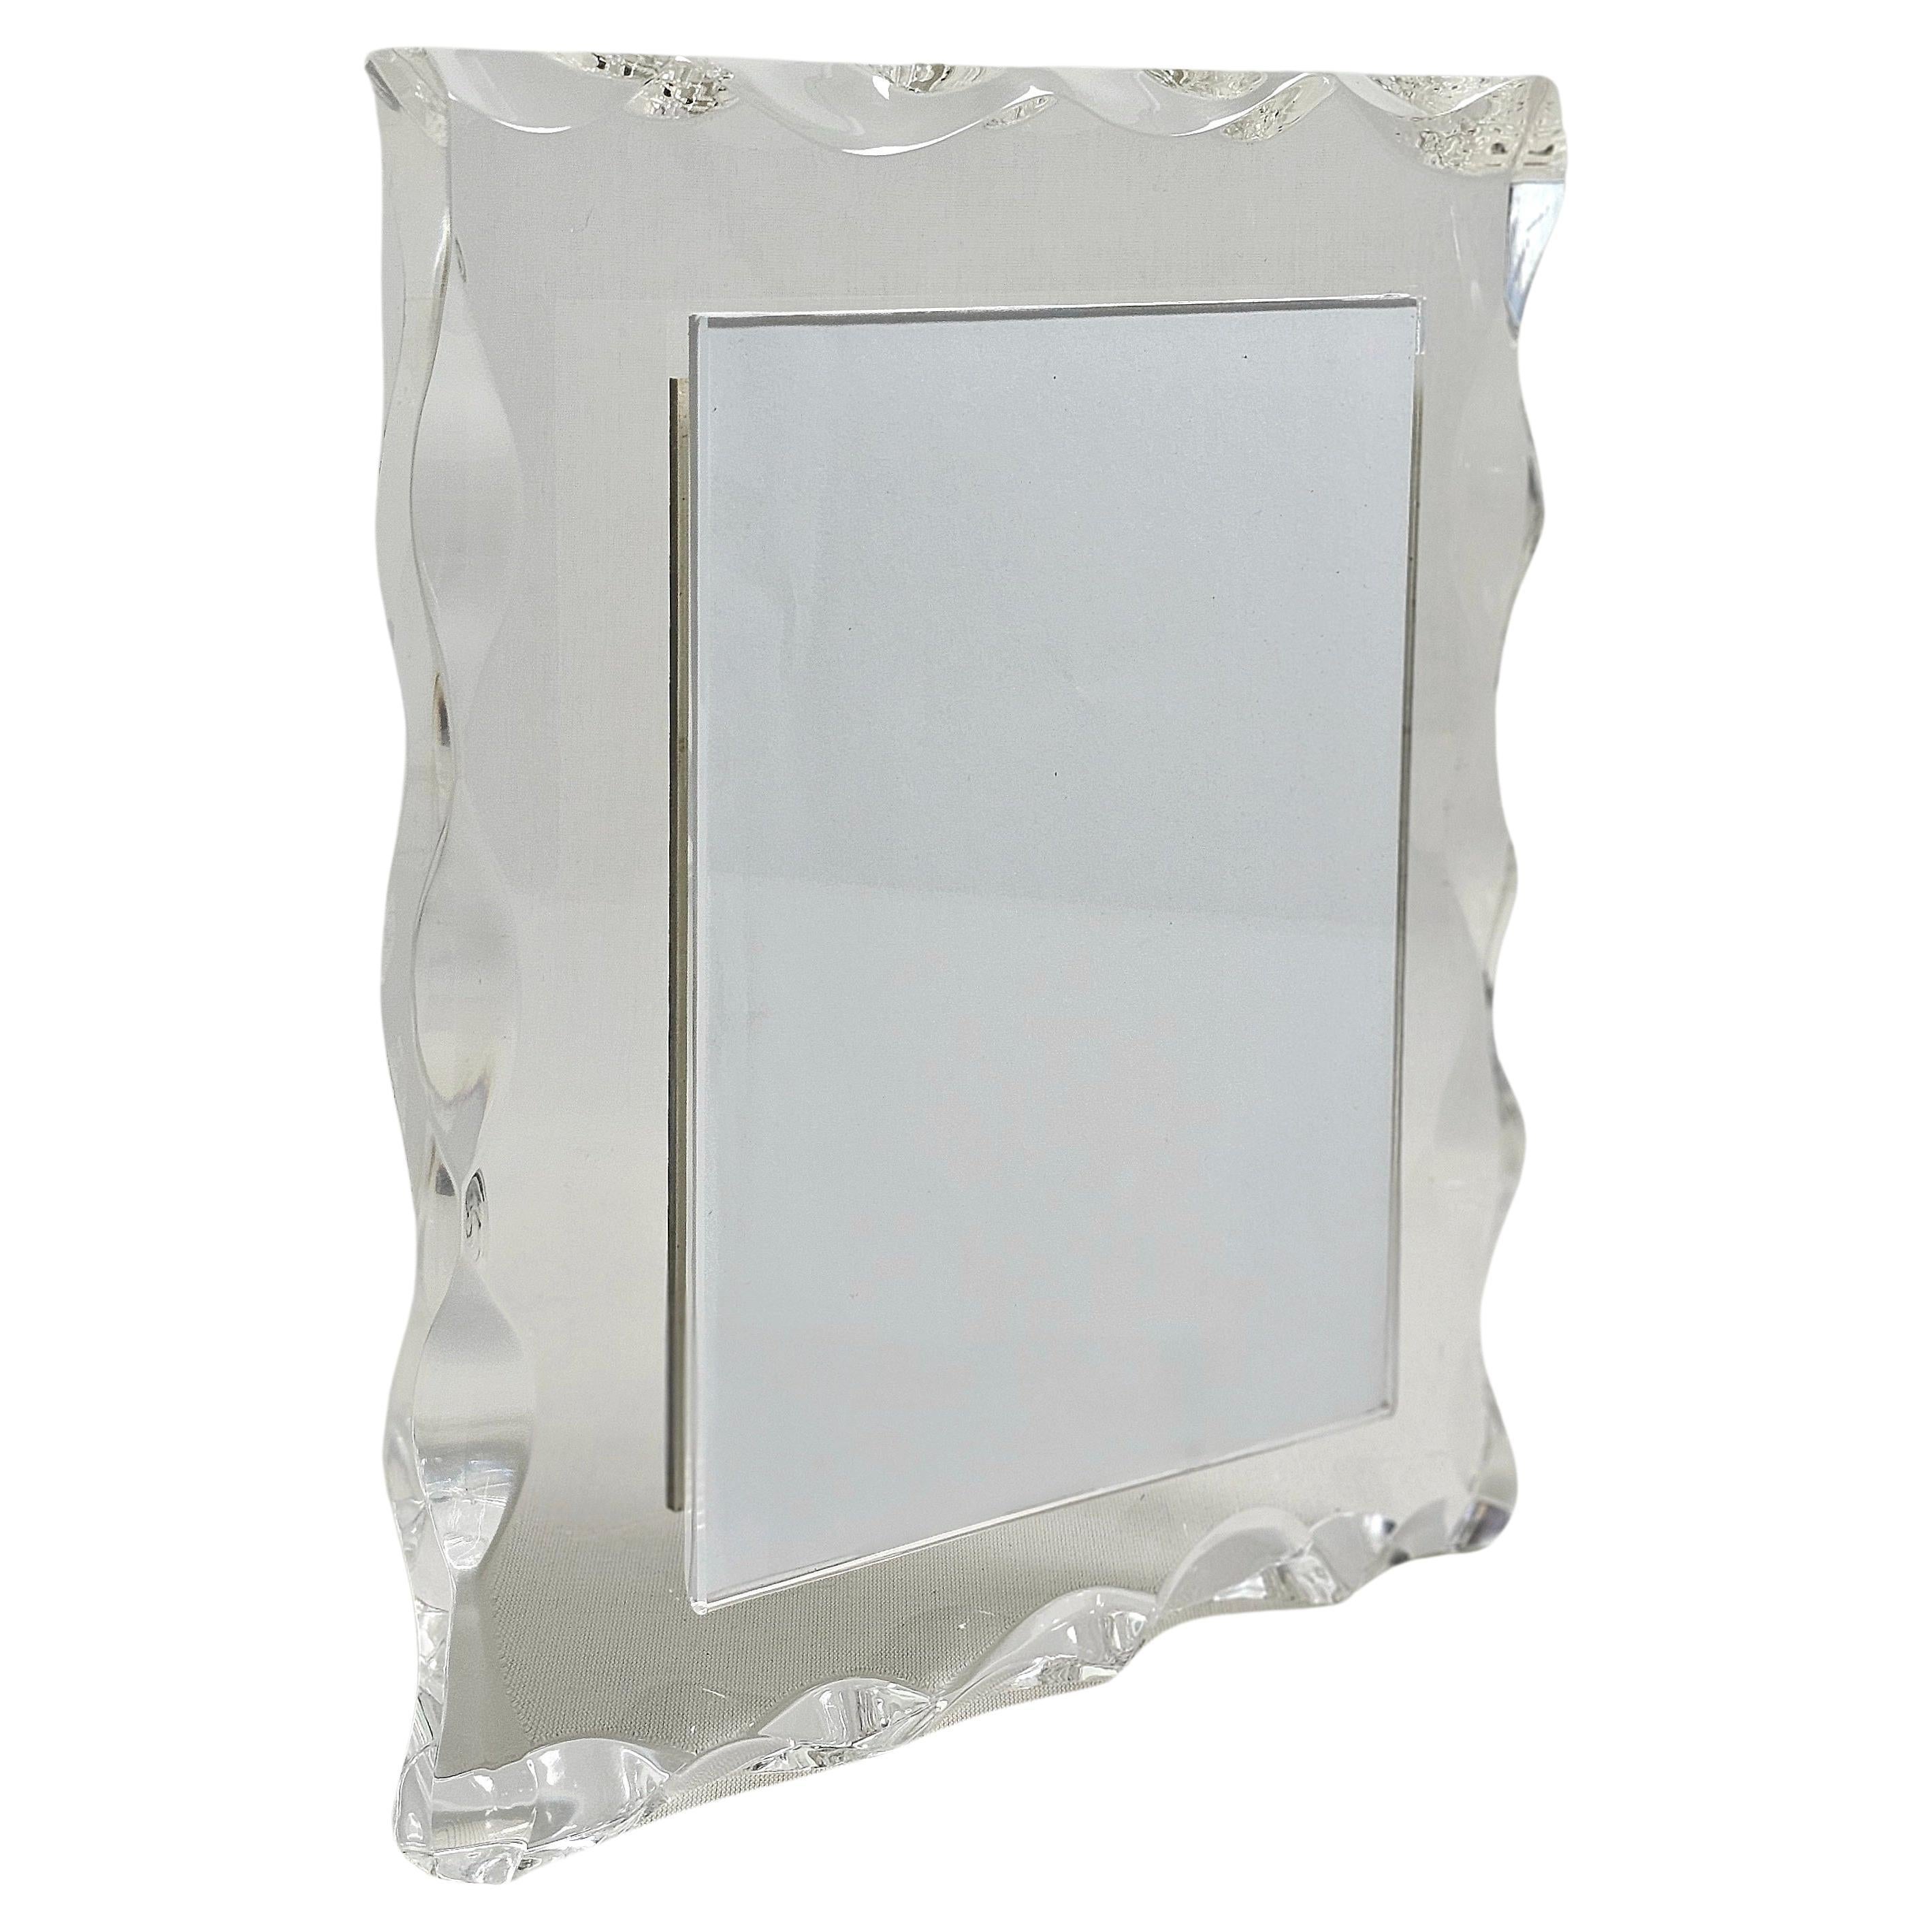 Decorative Object Picture Frame Plexglass Midcentury Italian Design 1980s For Sale